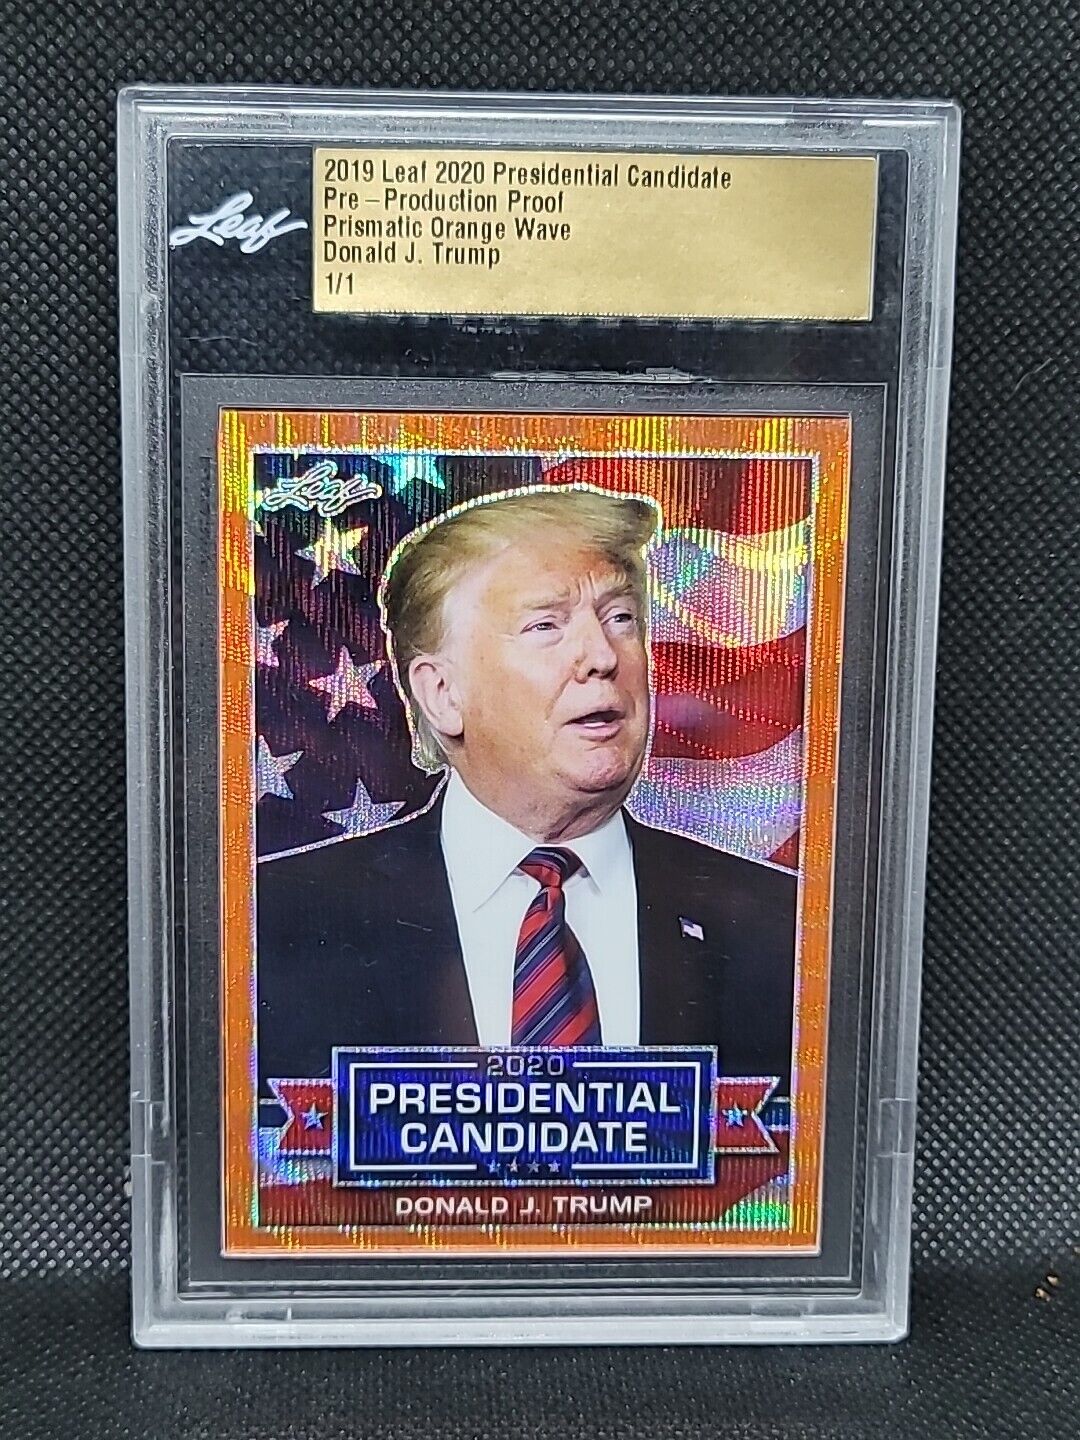 2019 Leaf 2020 Presidential Candidate Donald Trump Proof Prismatic Orange Wave